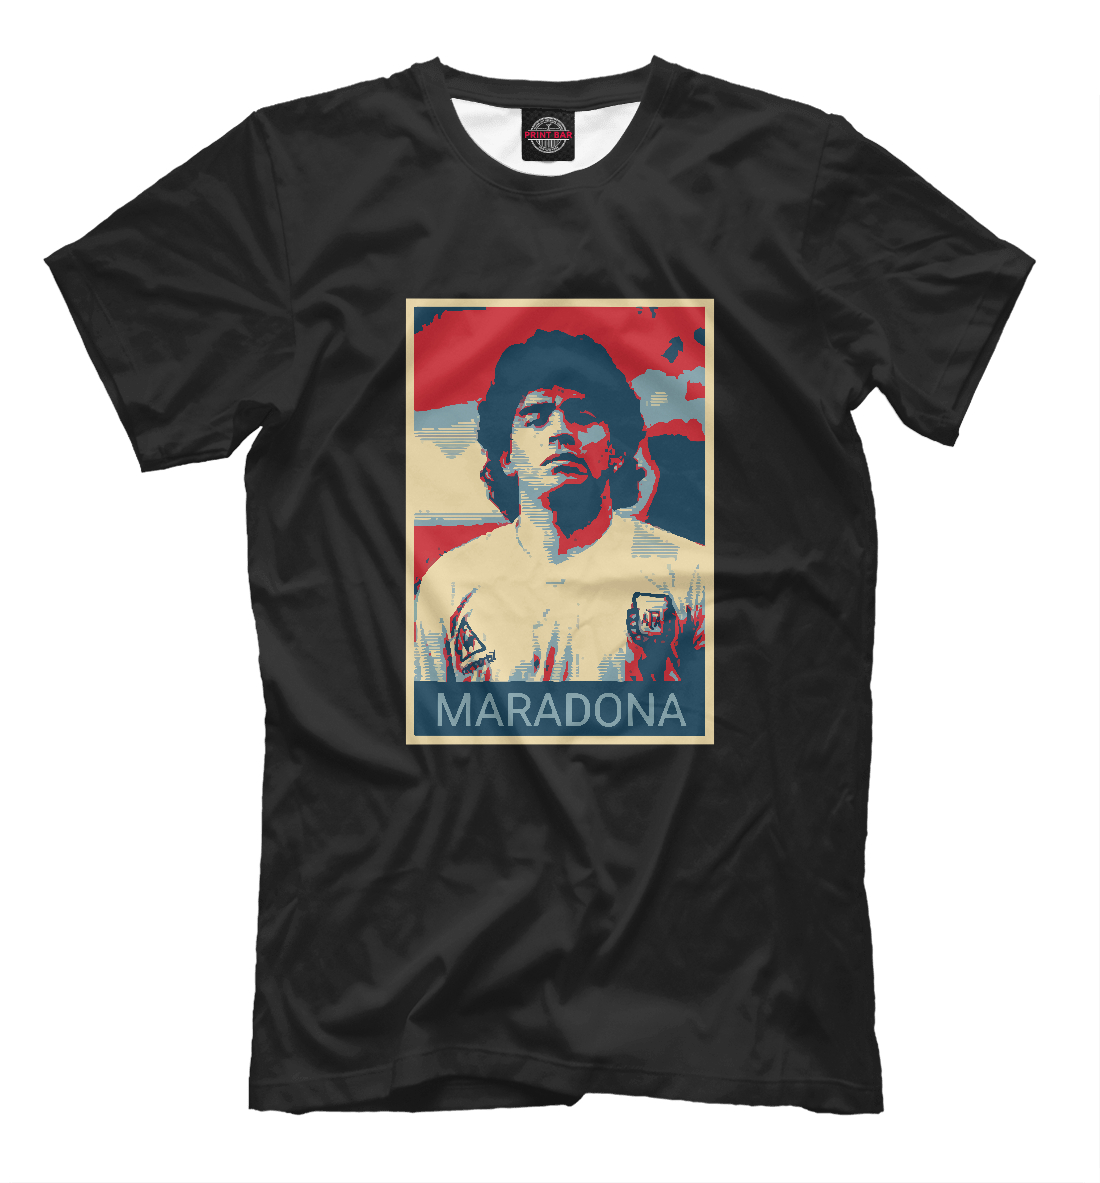 Футболка Maradona для мужчин, артикул: FLT-836145-fut-2mp